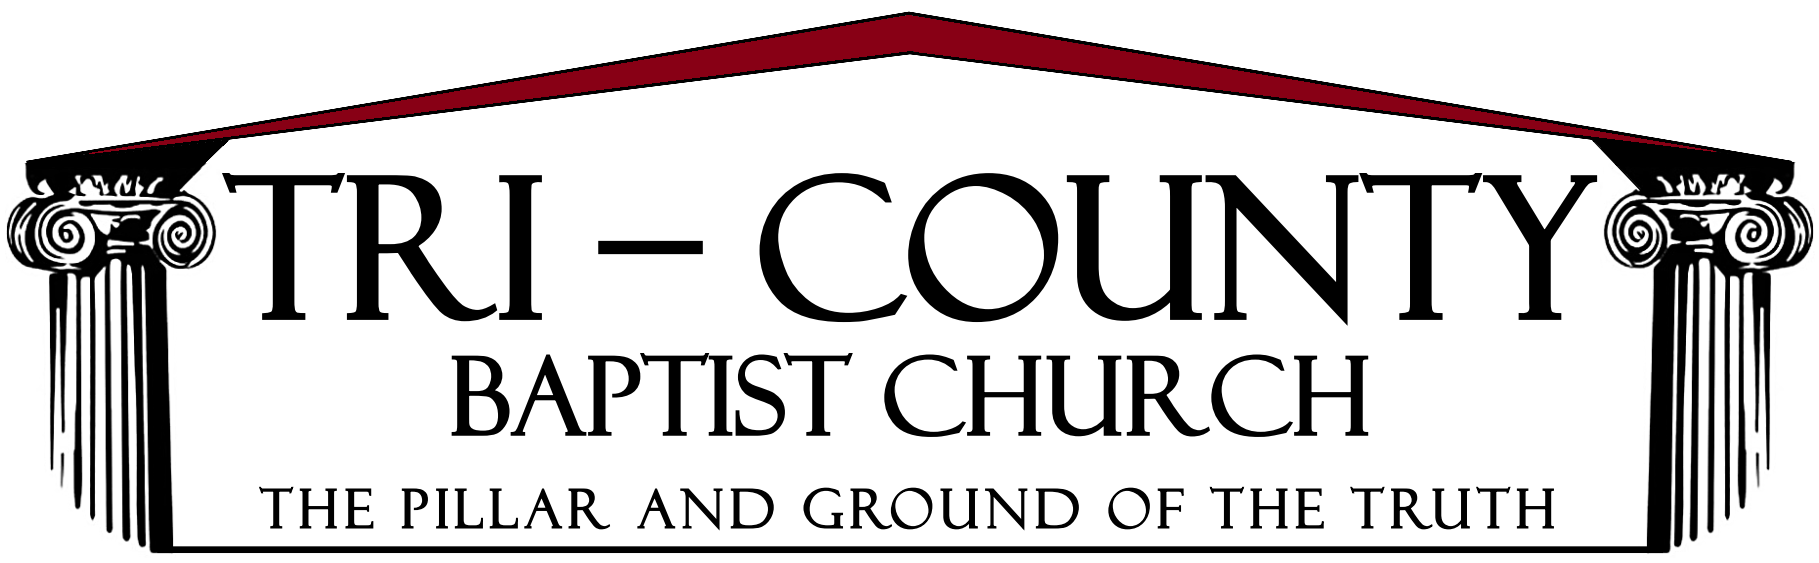 Tri-County Baptist Church Pillar Logo.